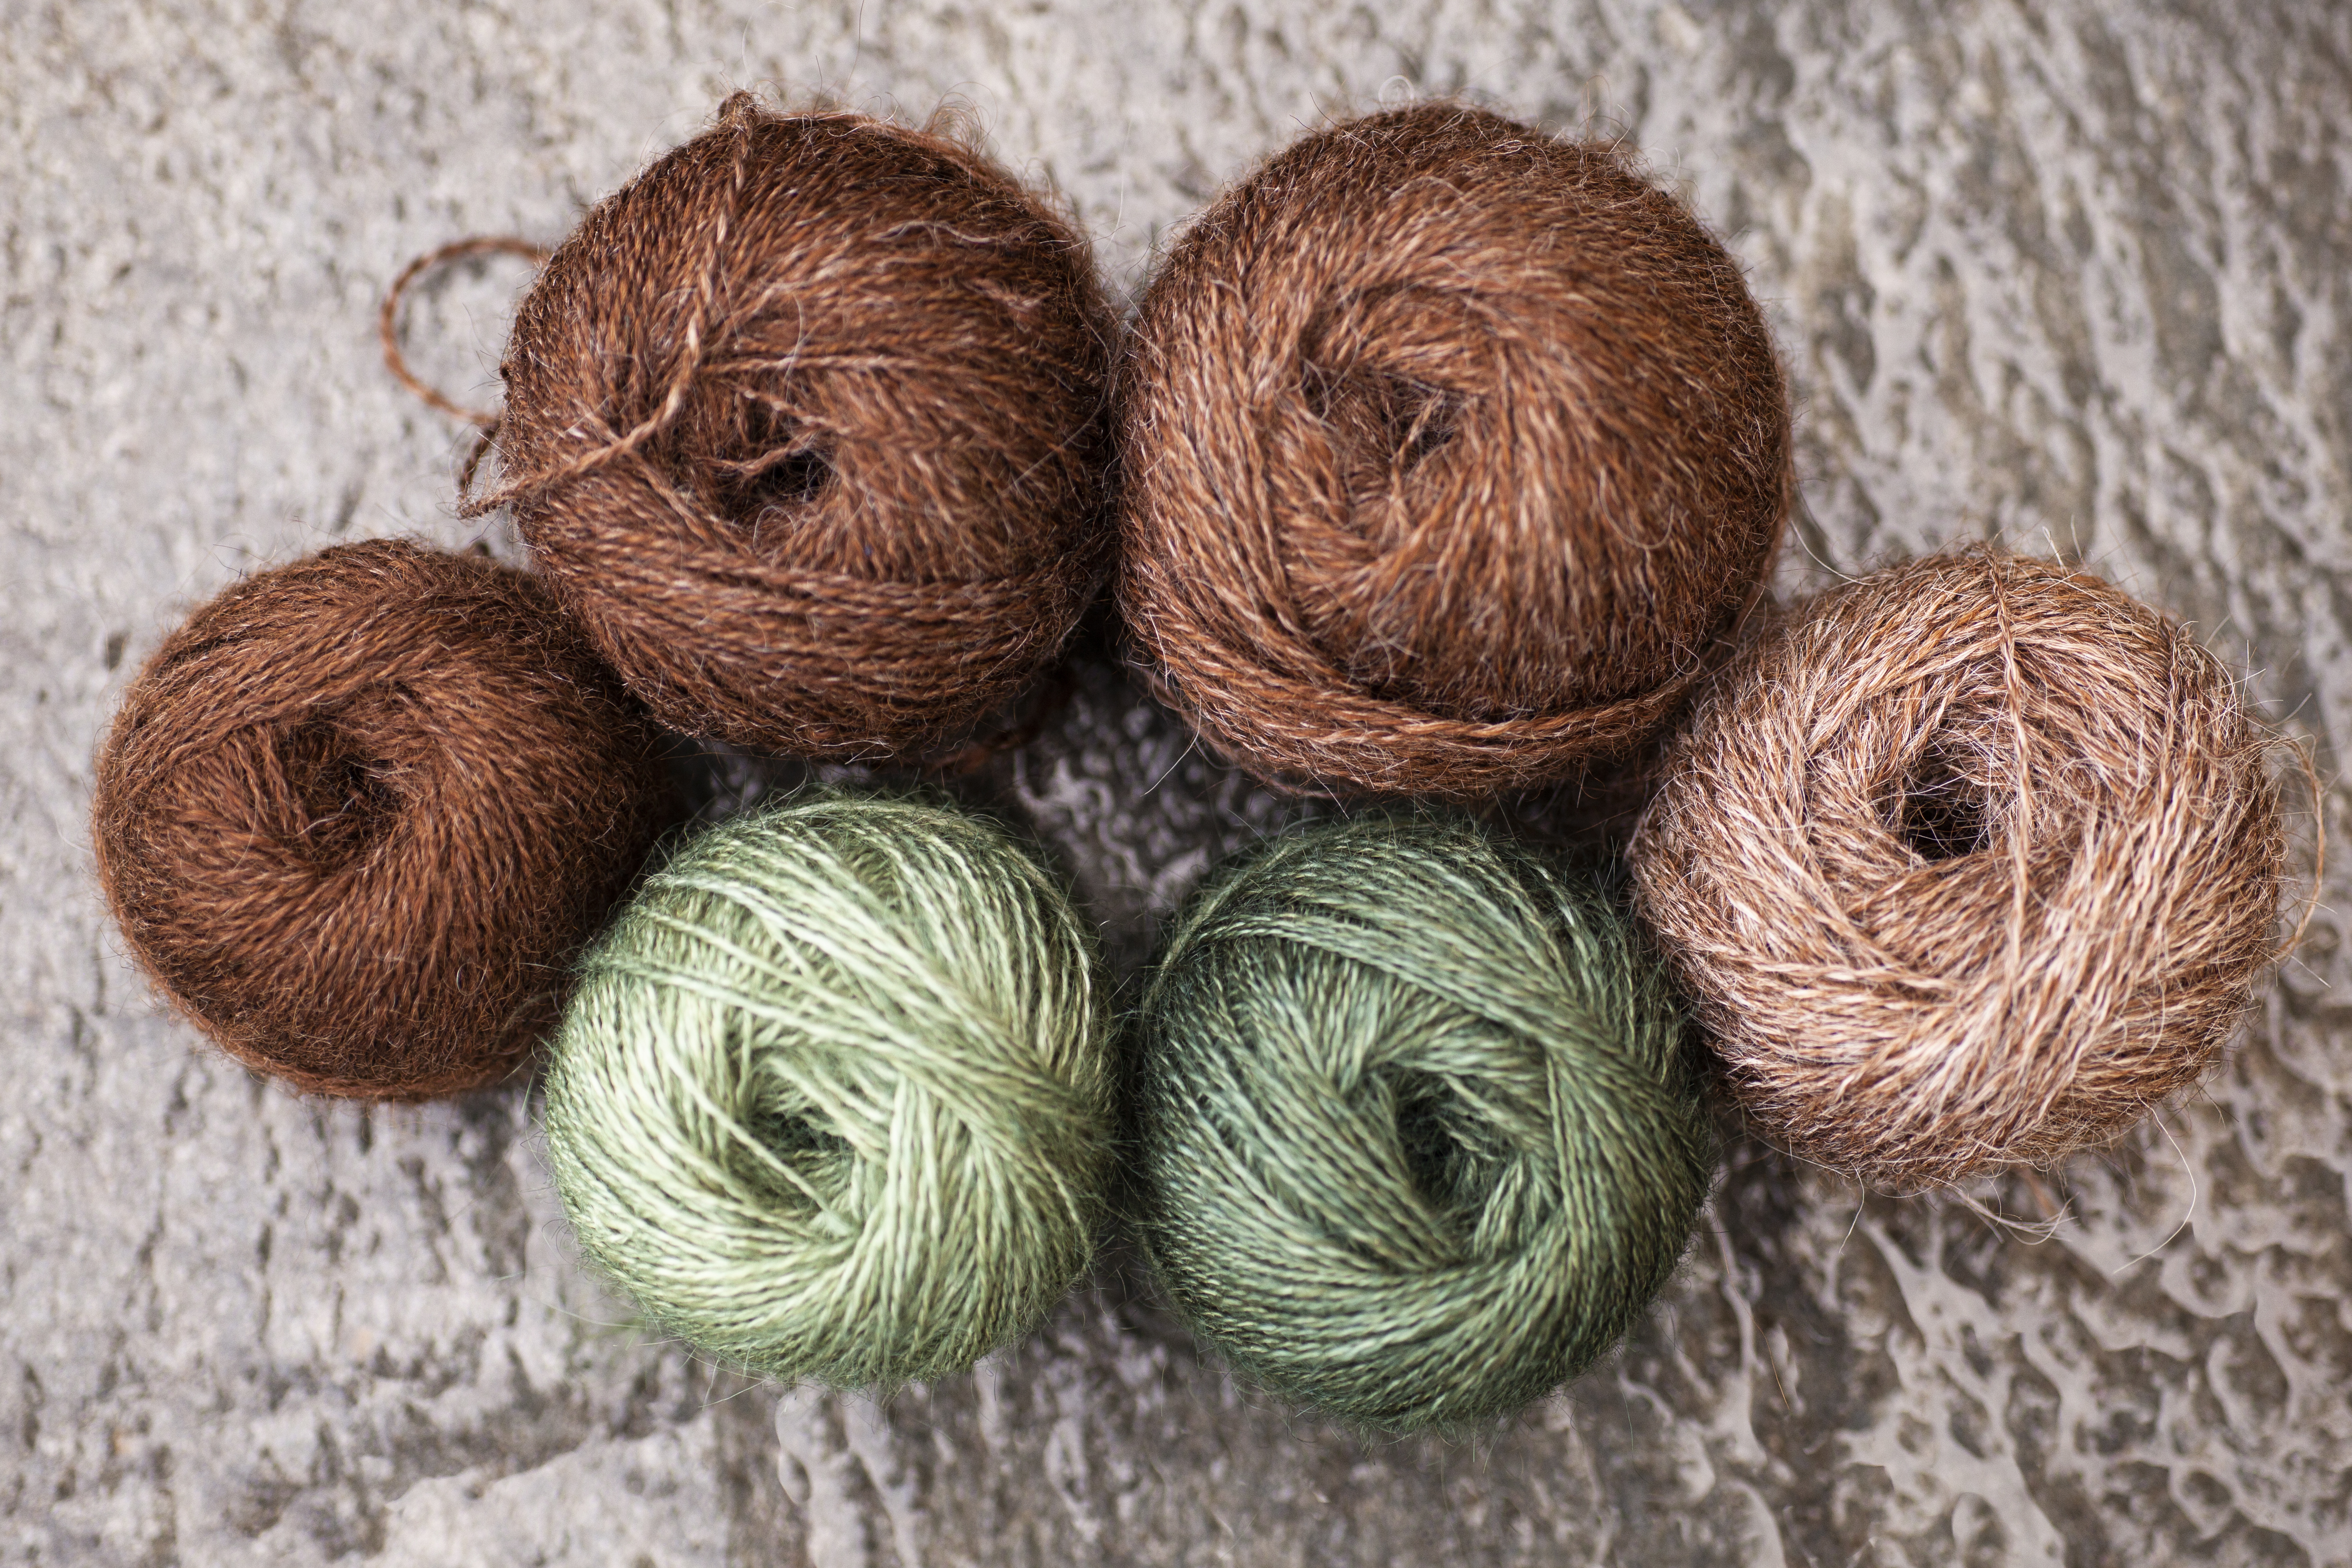 Balls of yarn in greens and natural browns. Photo by Dan Waltin